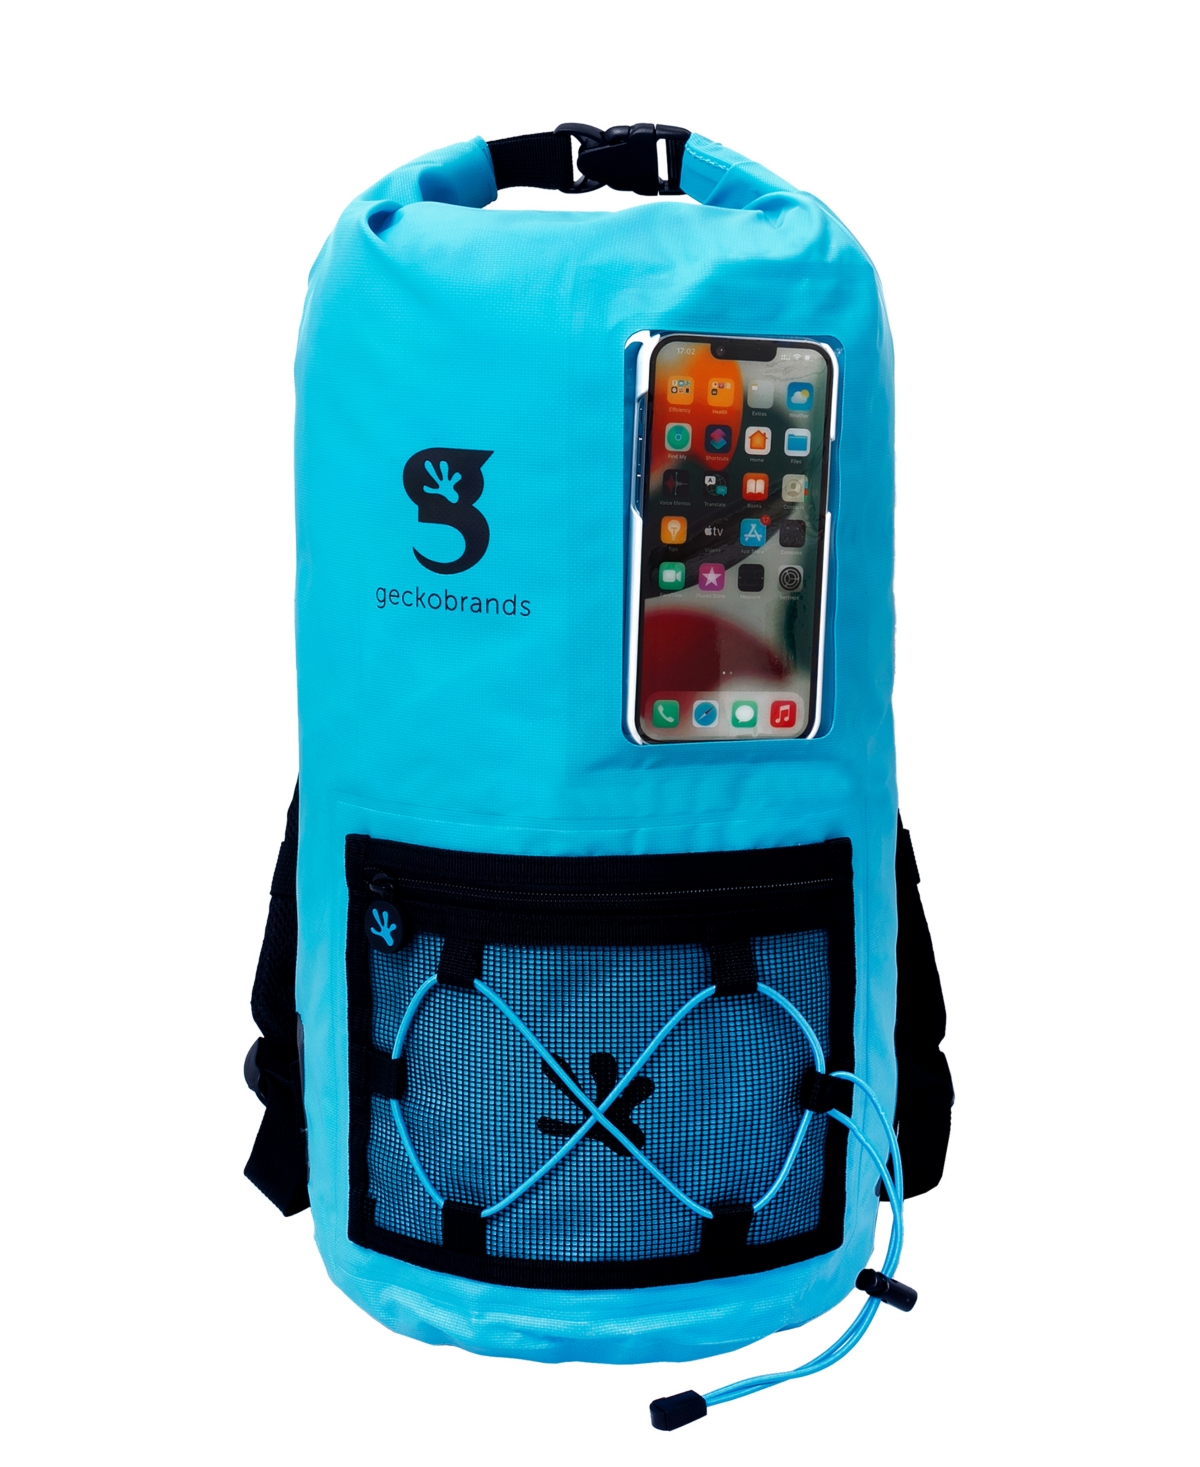 Geckobrands Hydroner 20 Liters Water-resistant Backpack In Neon Blue